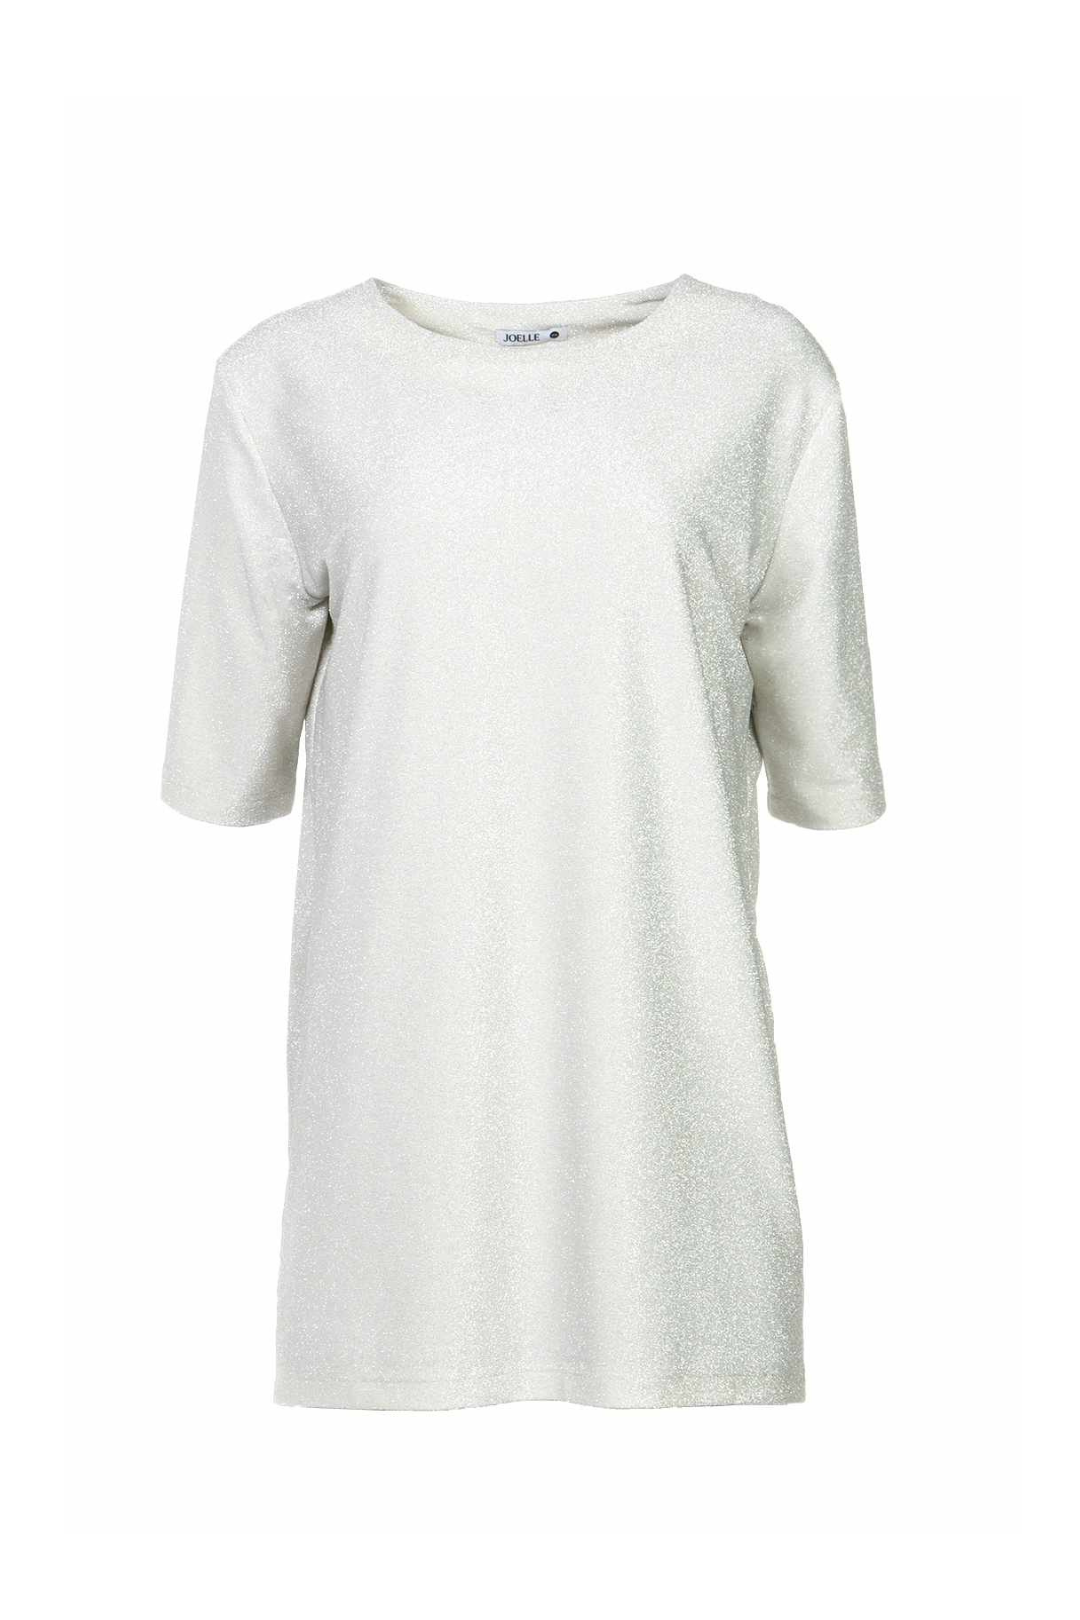 Silver T-Shirt Dress | Emily